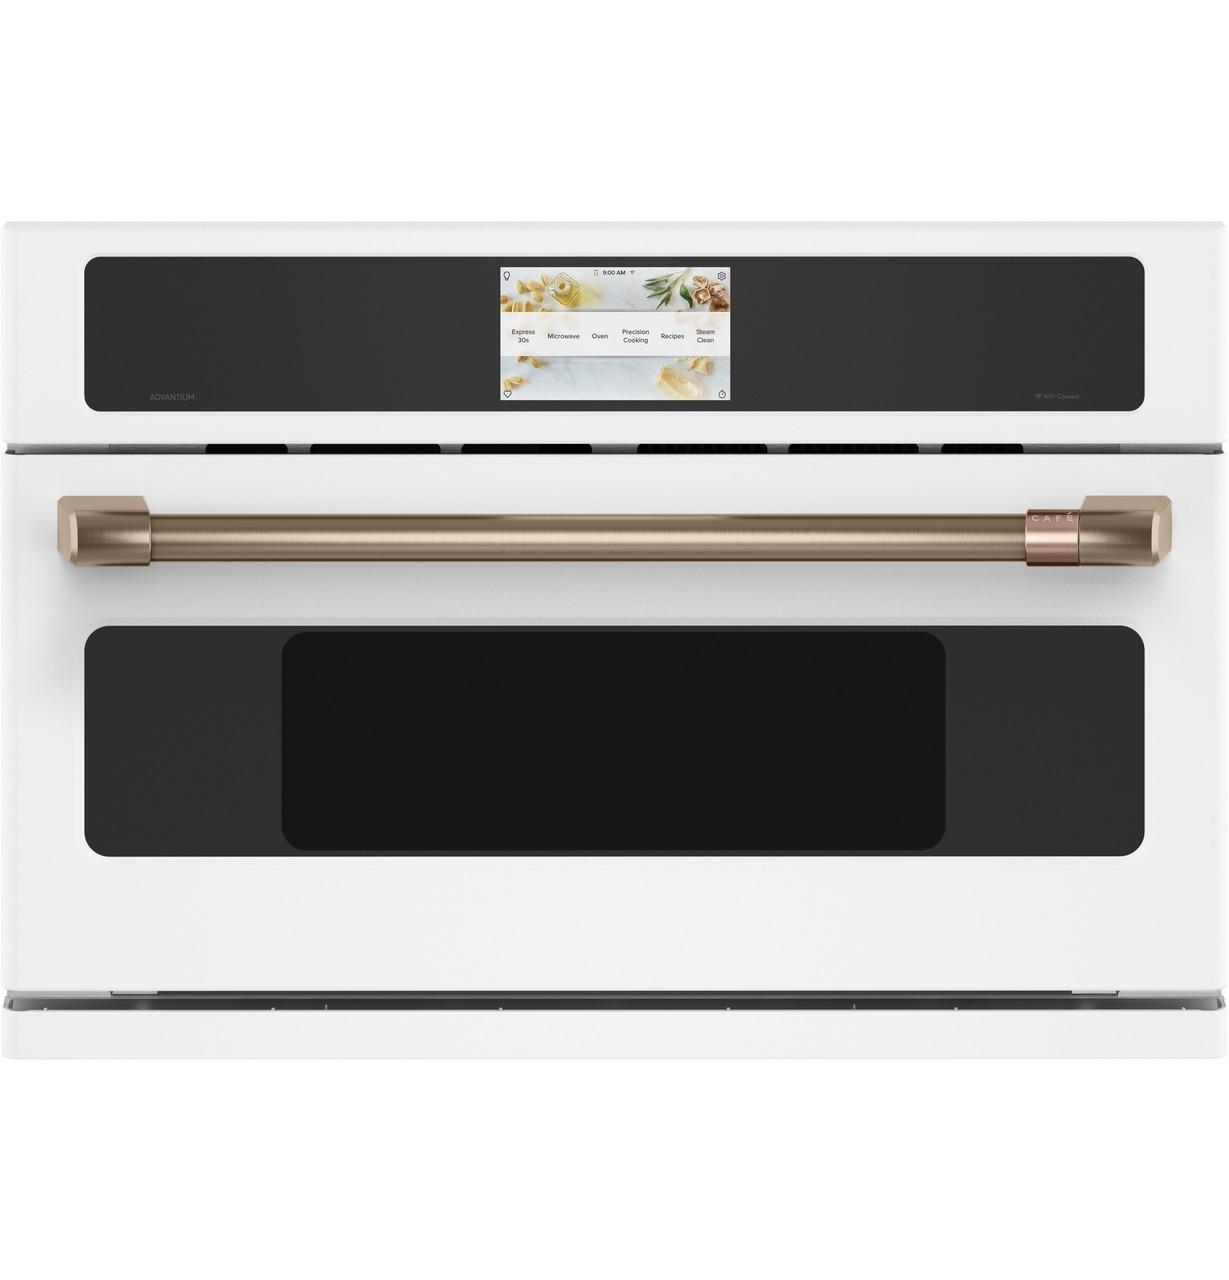 Cafe Caf(eback)™ 30" Smart Five in One Oven with 120V Advantium® Technology